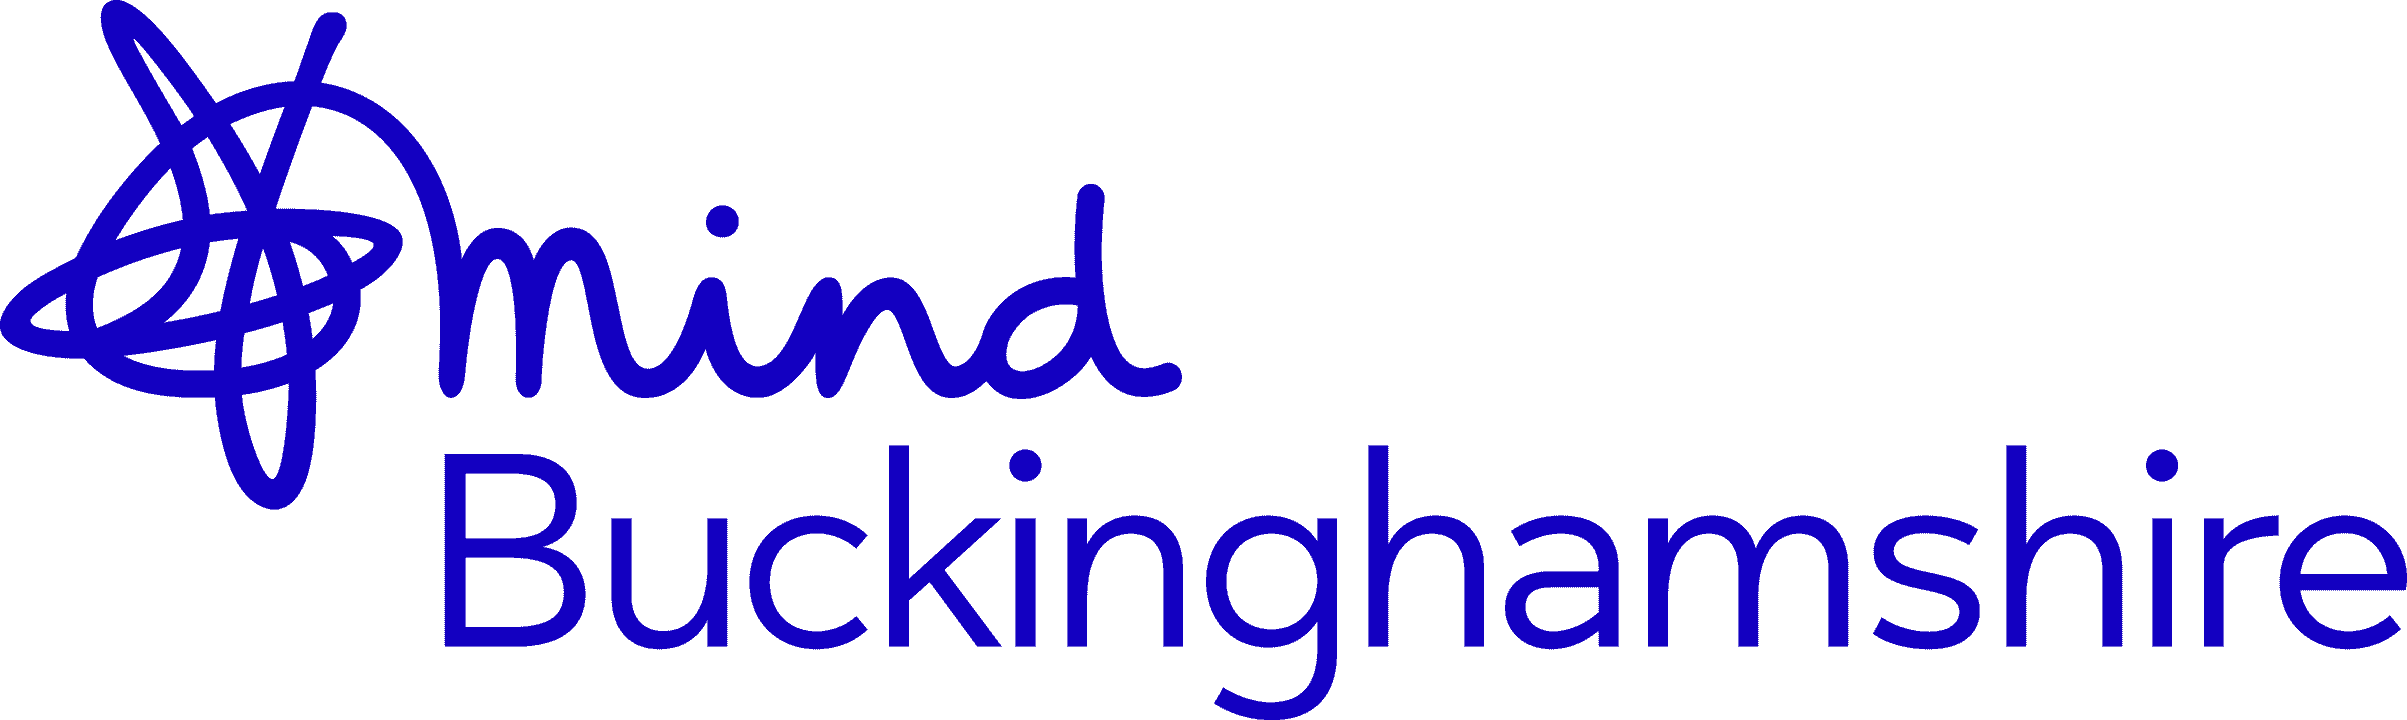 https://ef7reu2nmnd.exactdn.com/wp-content/uploads/2021/09/Buckinghamshire_Mind_Logo_stacked_RGB.png?strip=all&lossy=1&ssl=1